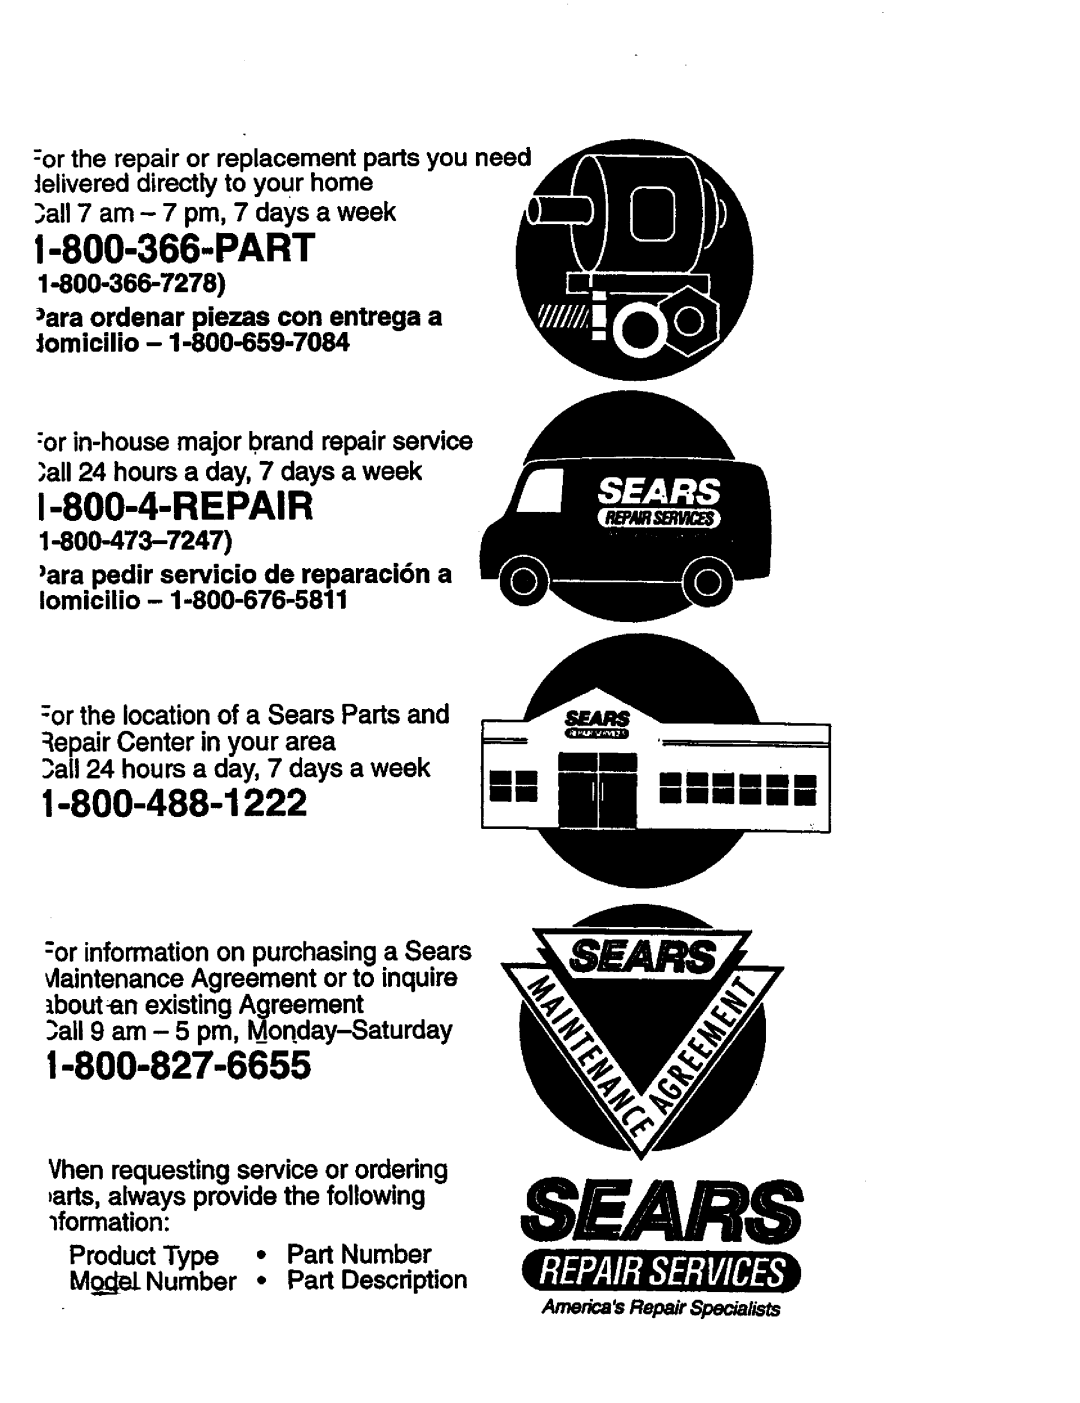 Univex 358.799370 orinformationon purchasinga Sears, VlaintenanceAgreementor to inquire, Part, Repair, 1-800-488-1222 